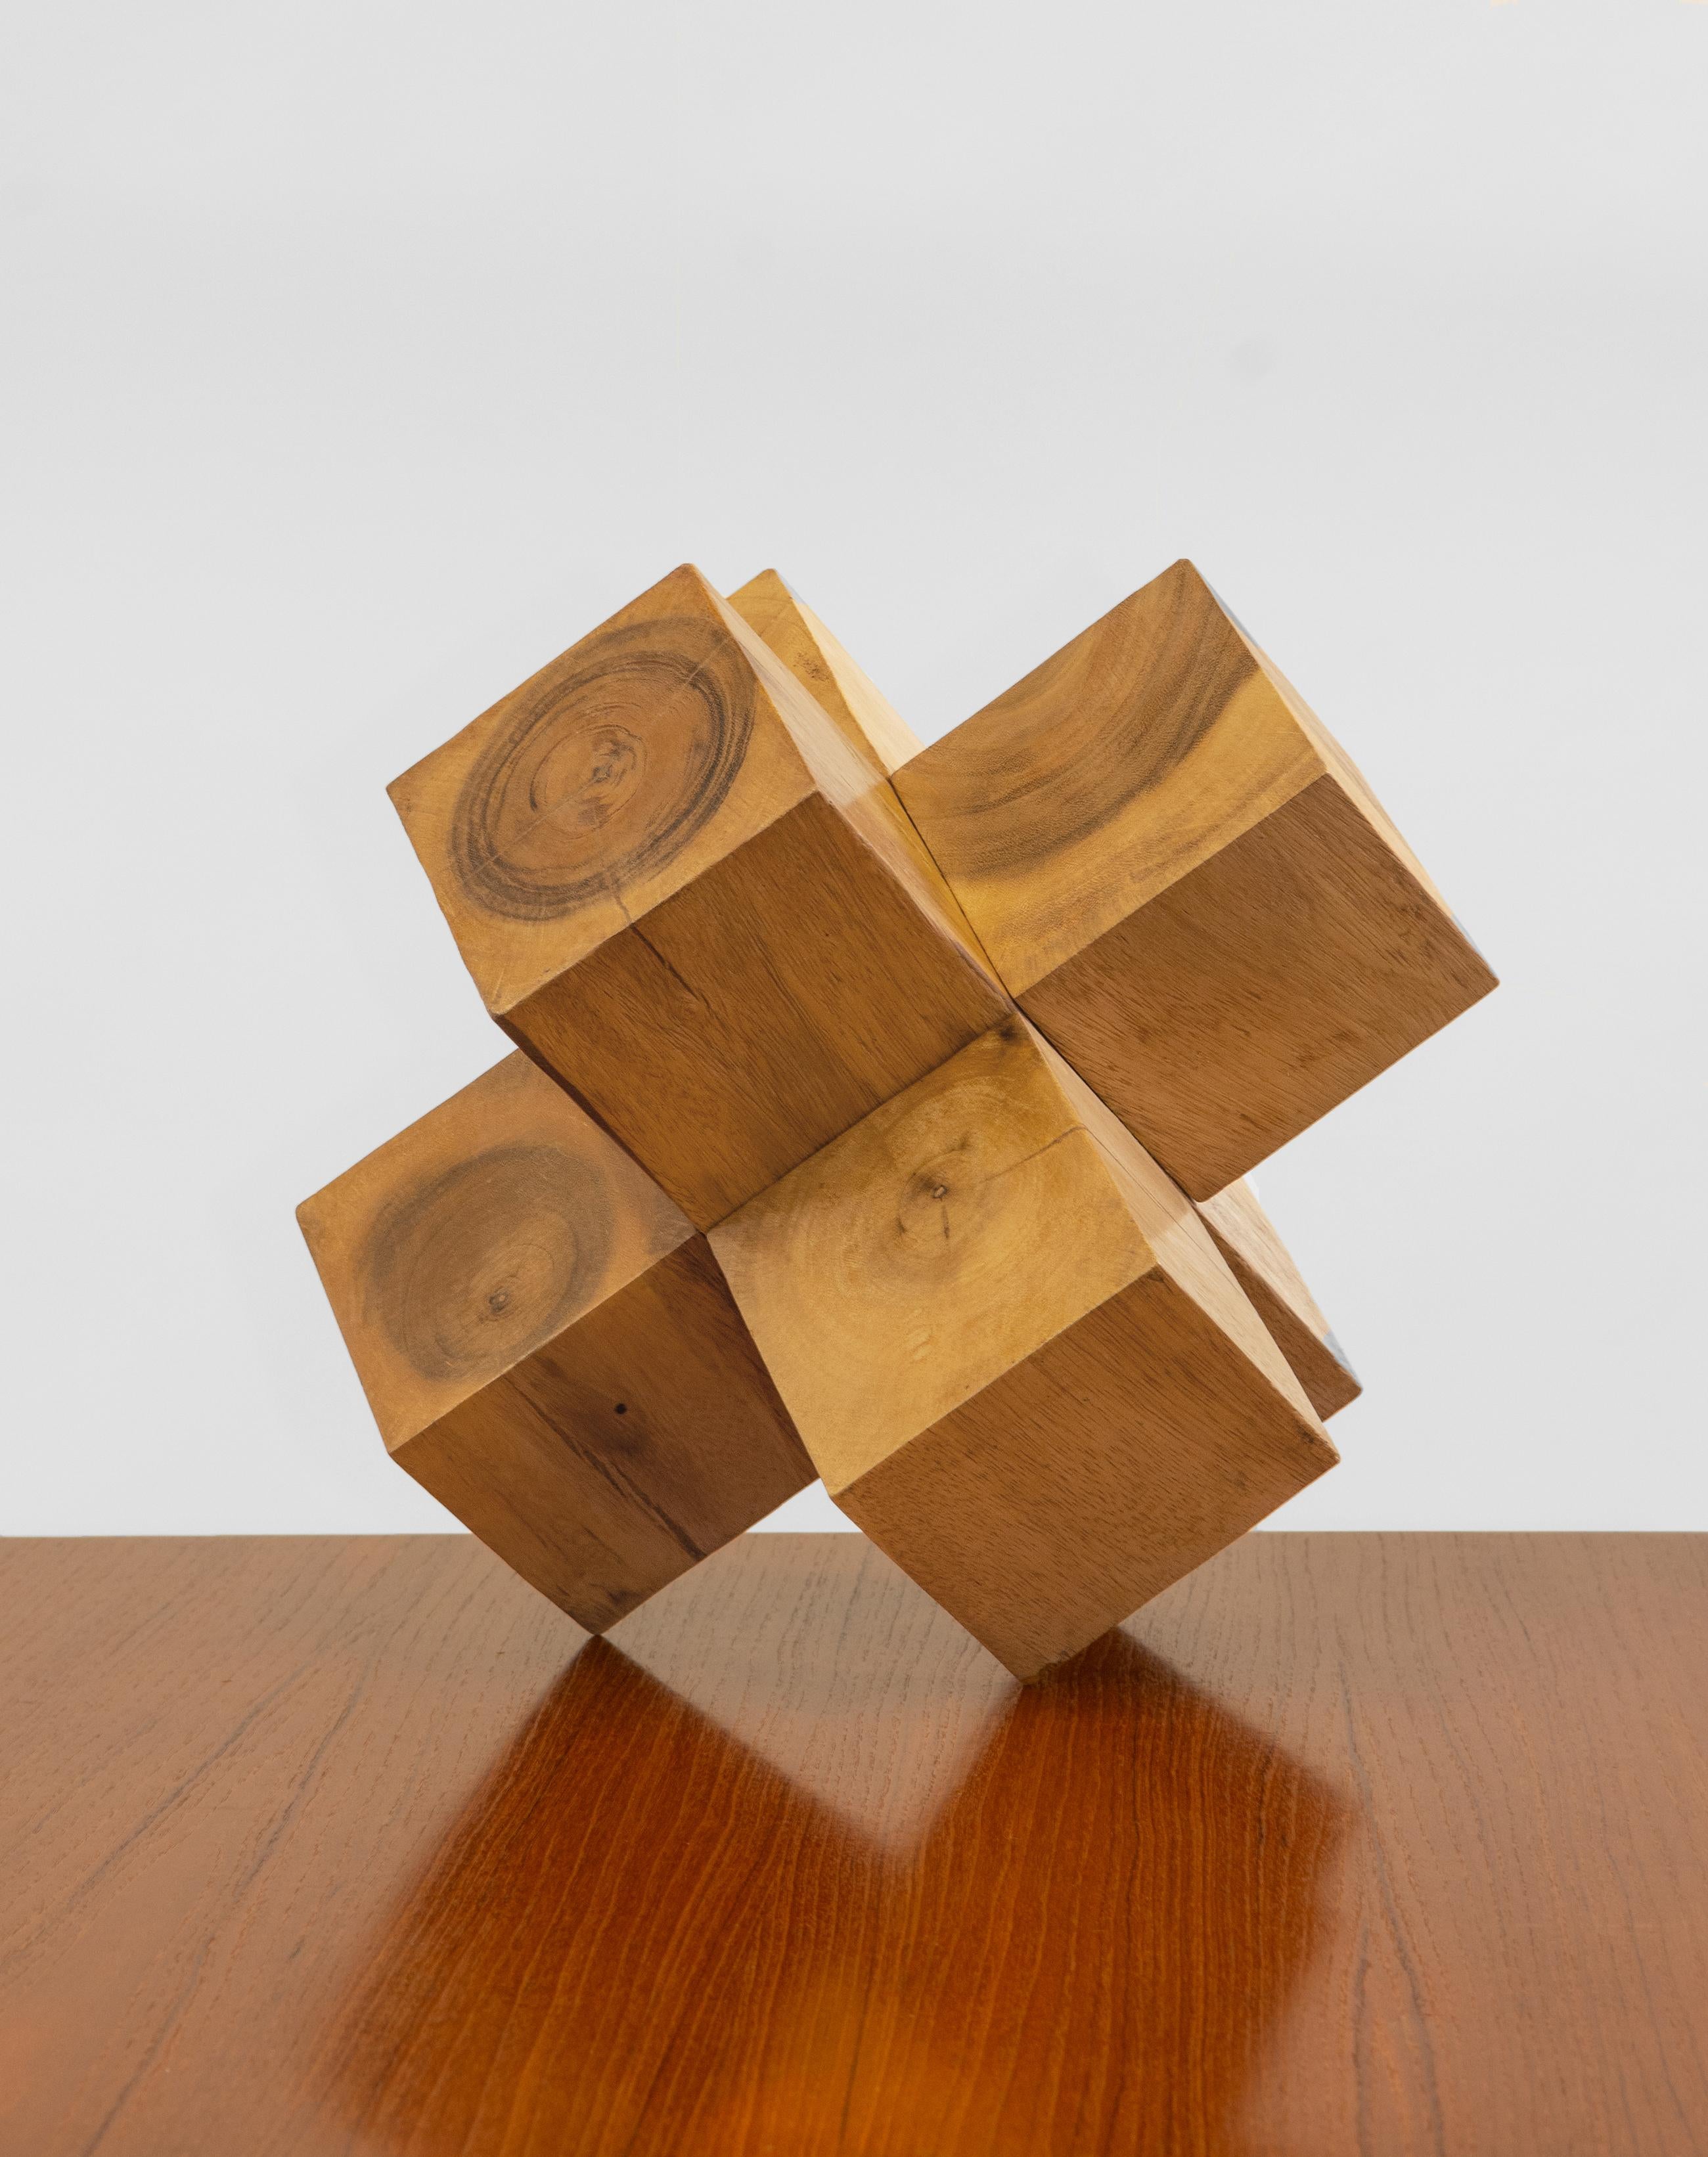 American Vintage Wood Geometric Sculpture Stamped A Geddis 77 For Sale